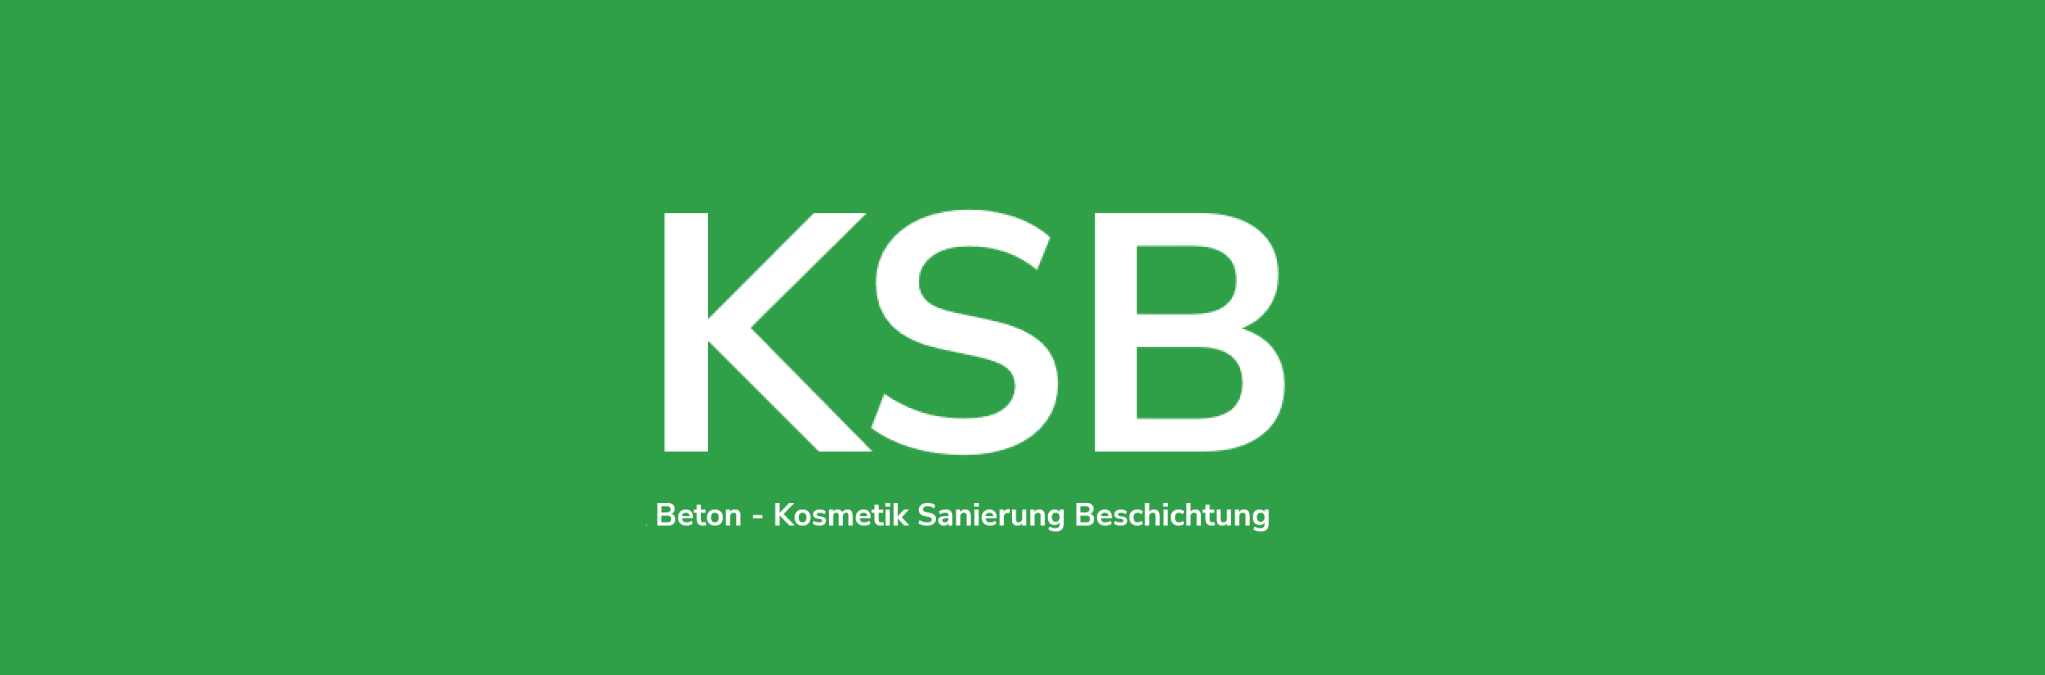 KSB-Beton Logo